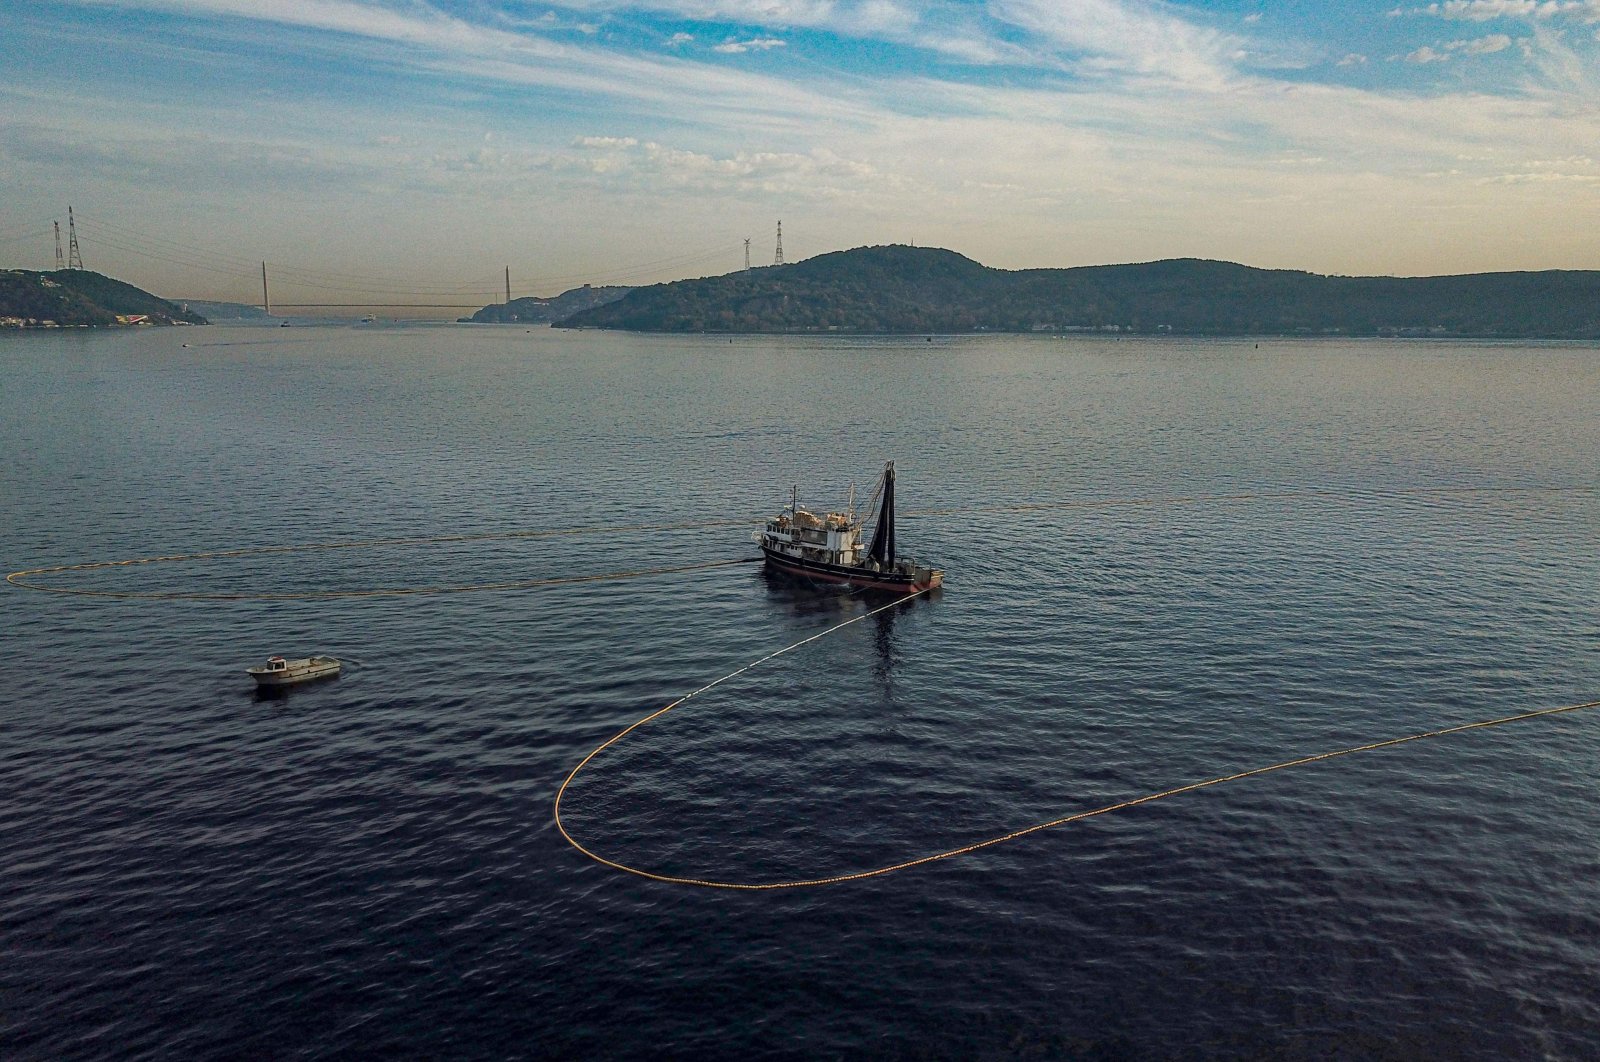 Stok ikan anjlok di Bosporus Türkiye di tengah persaingan